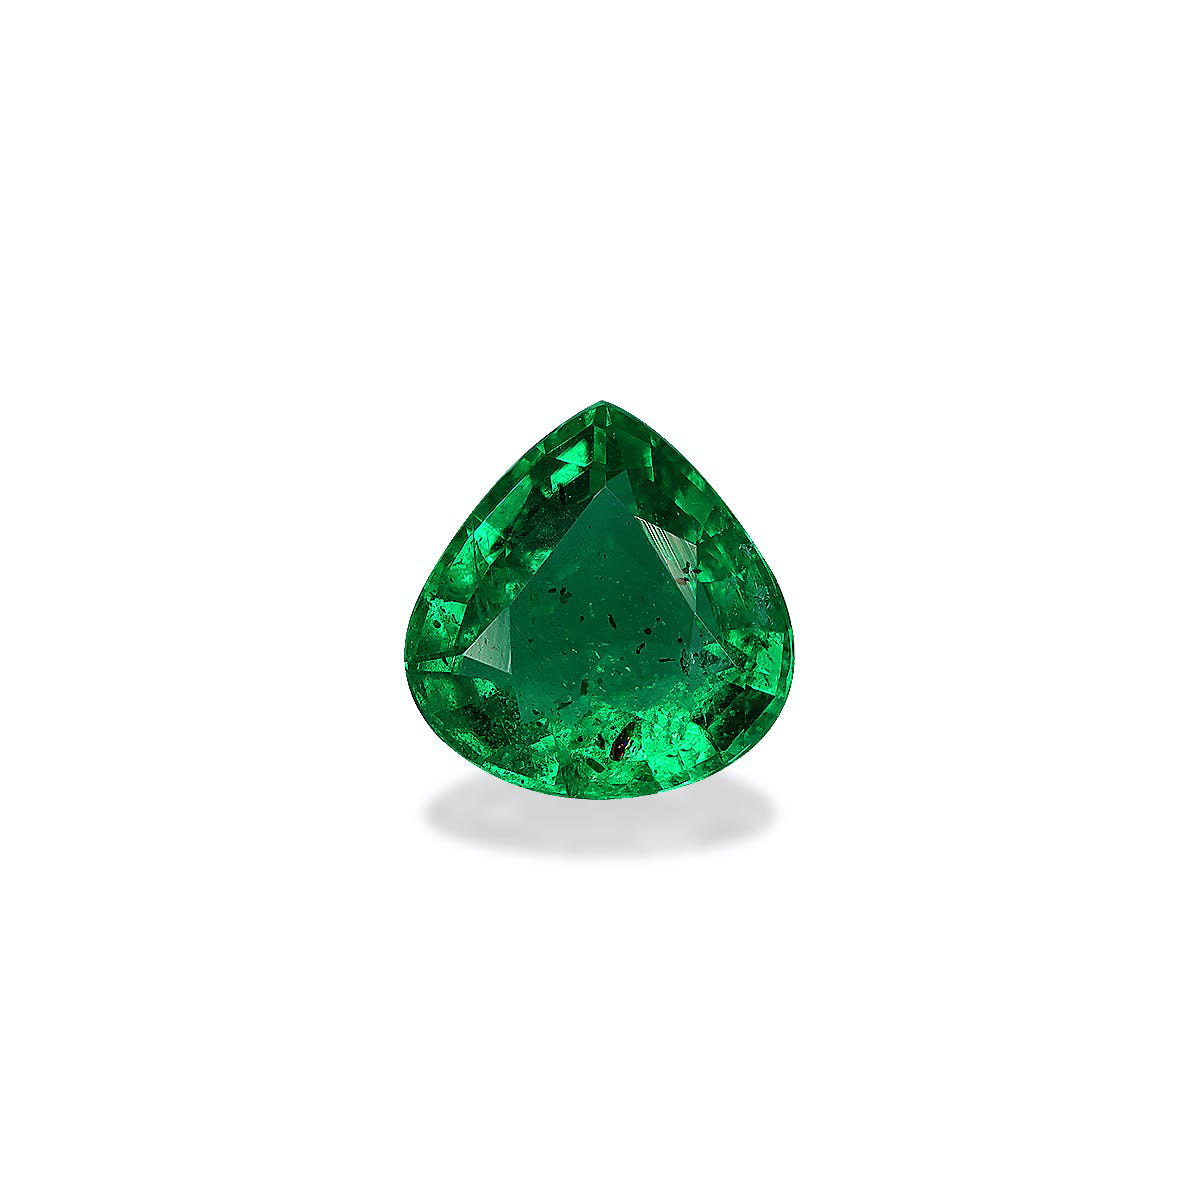 Green Zambian Emerald 1.95ct - 8mm (PG0433)